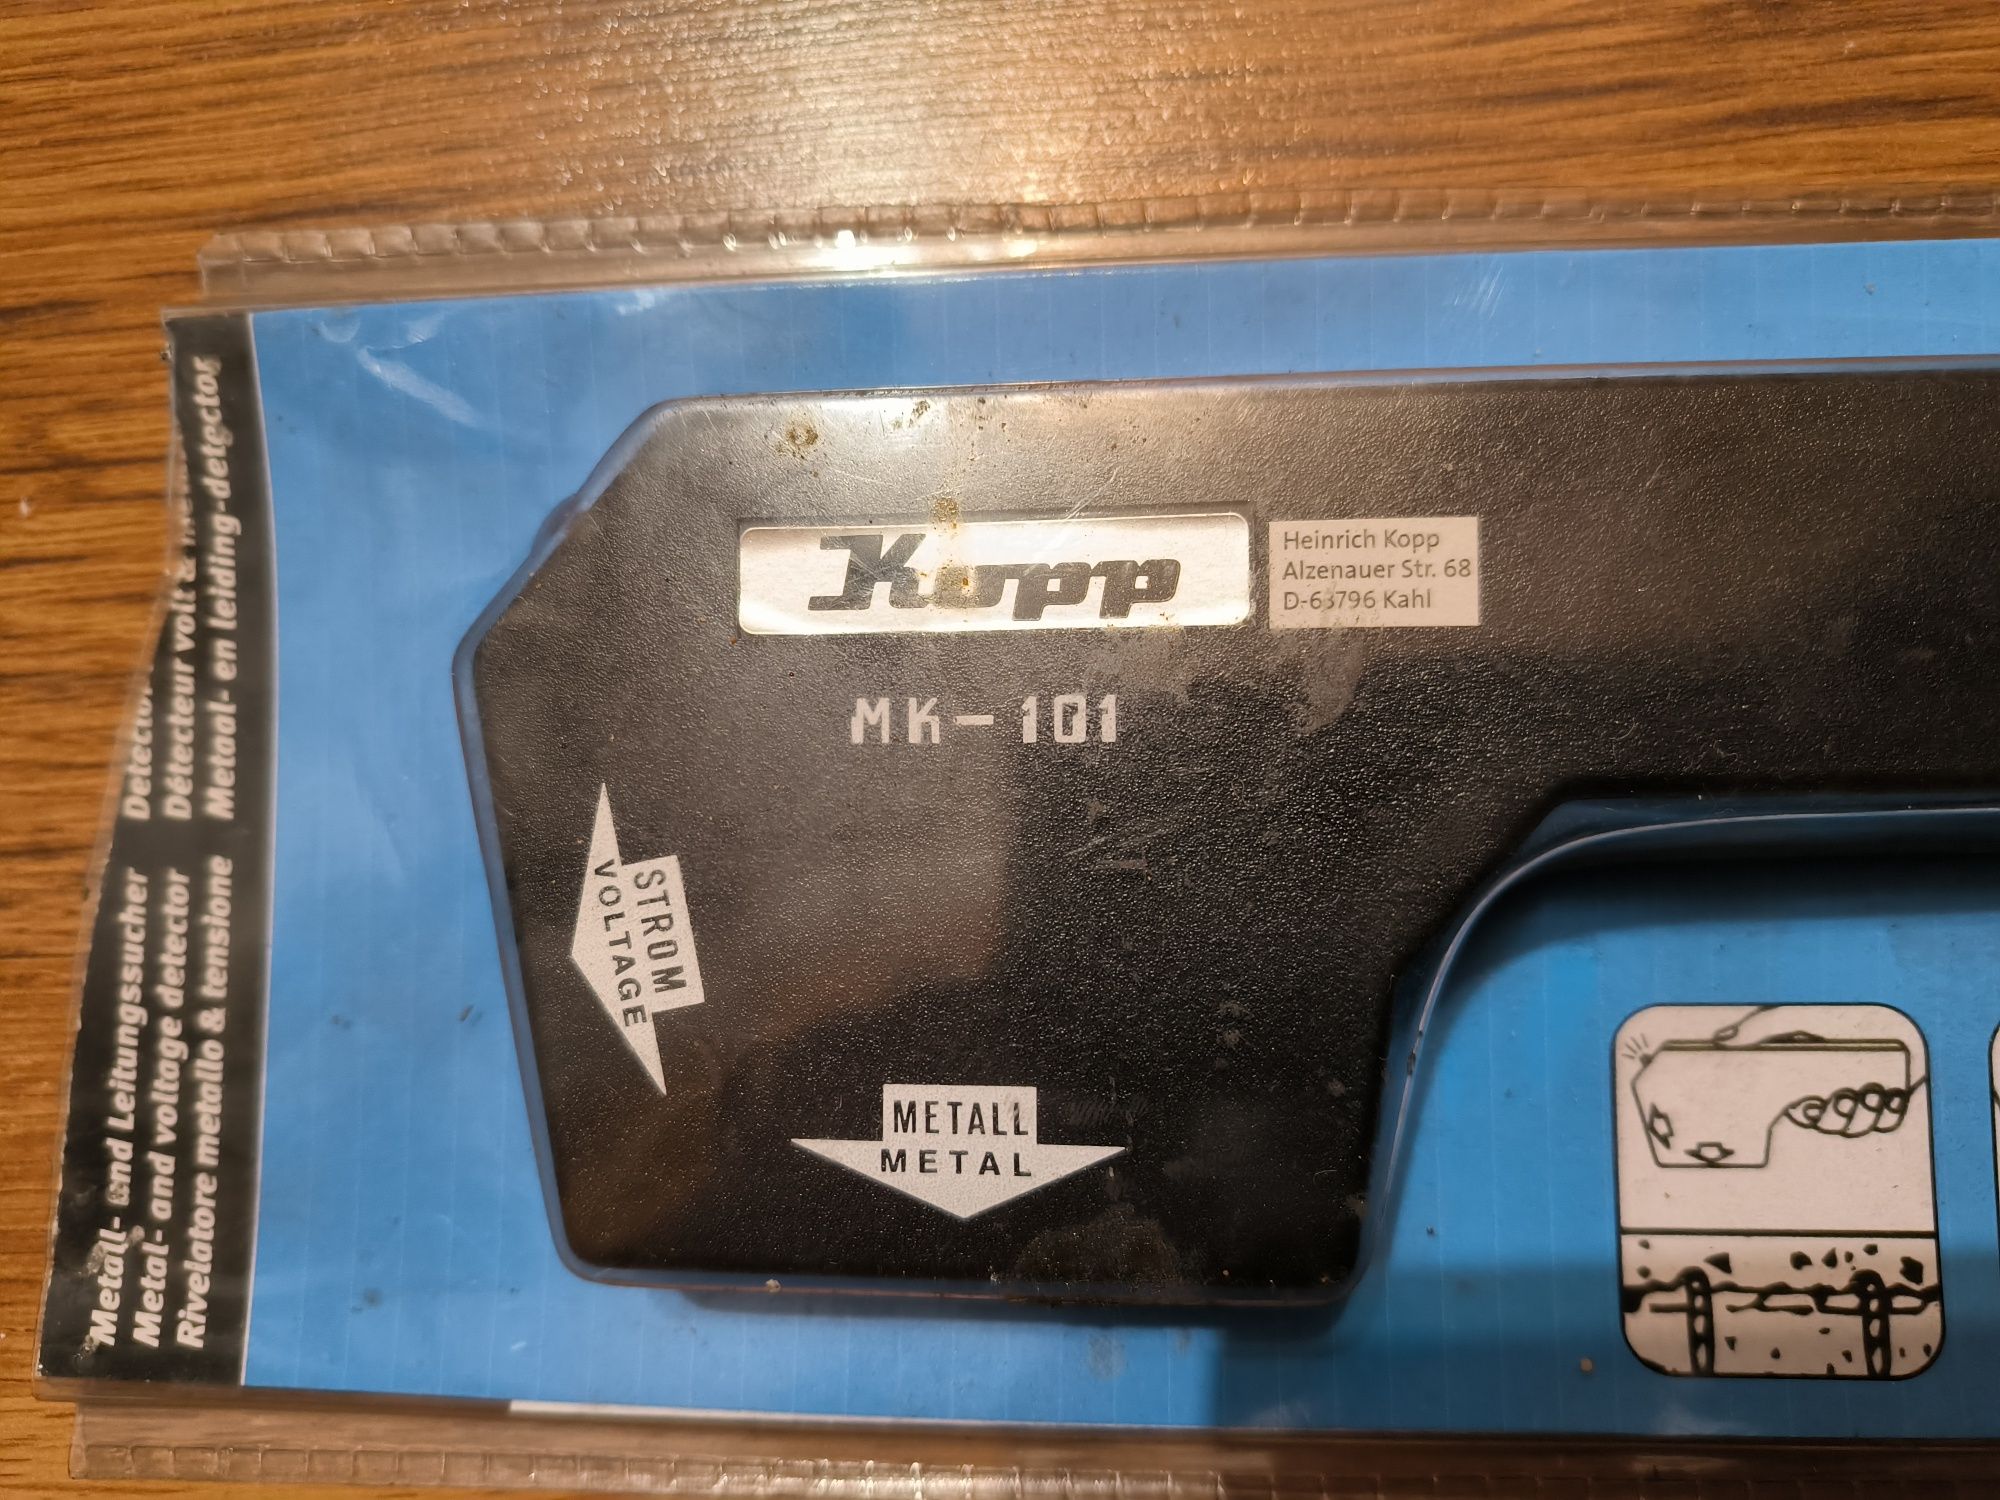 Kopp mk-101, металошукач, металоискатель, токоискатель, Germany new